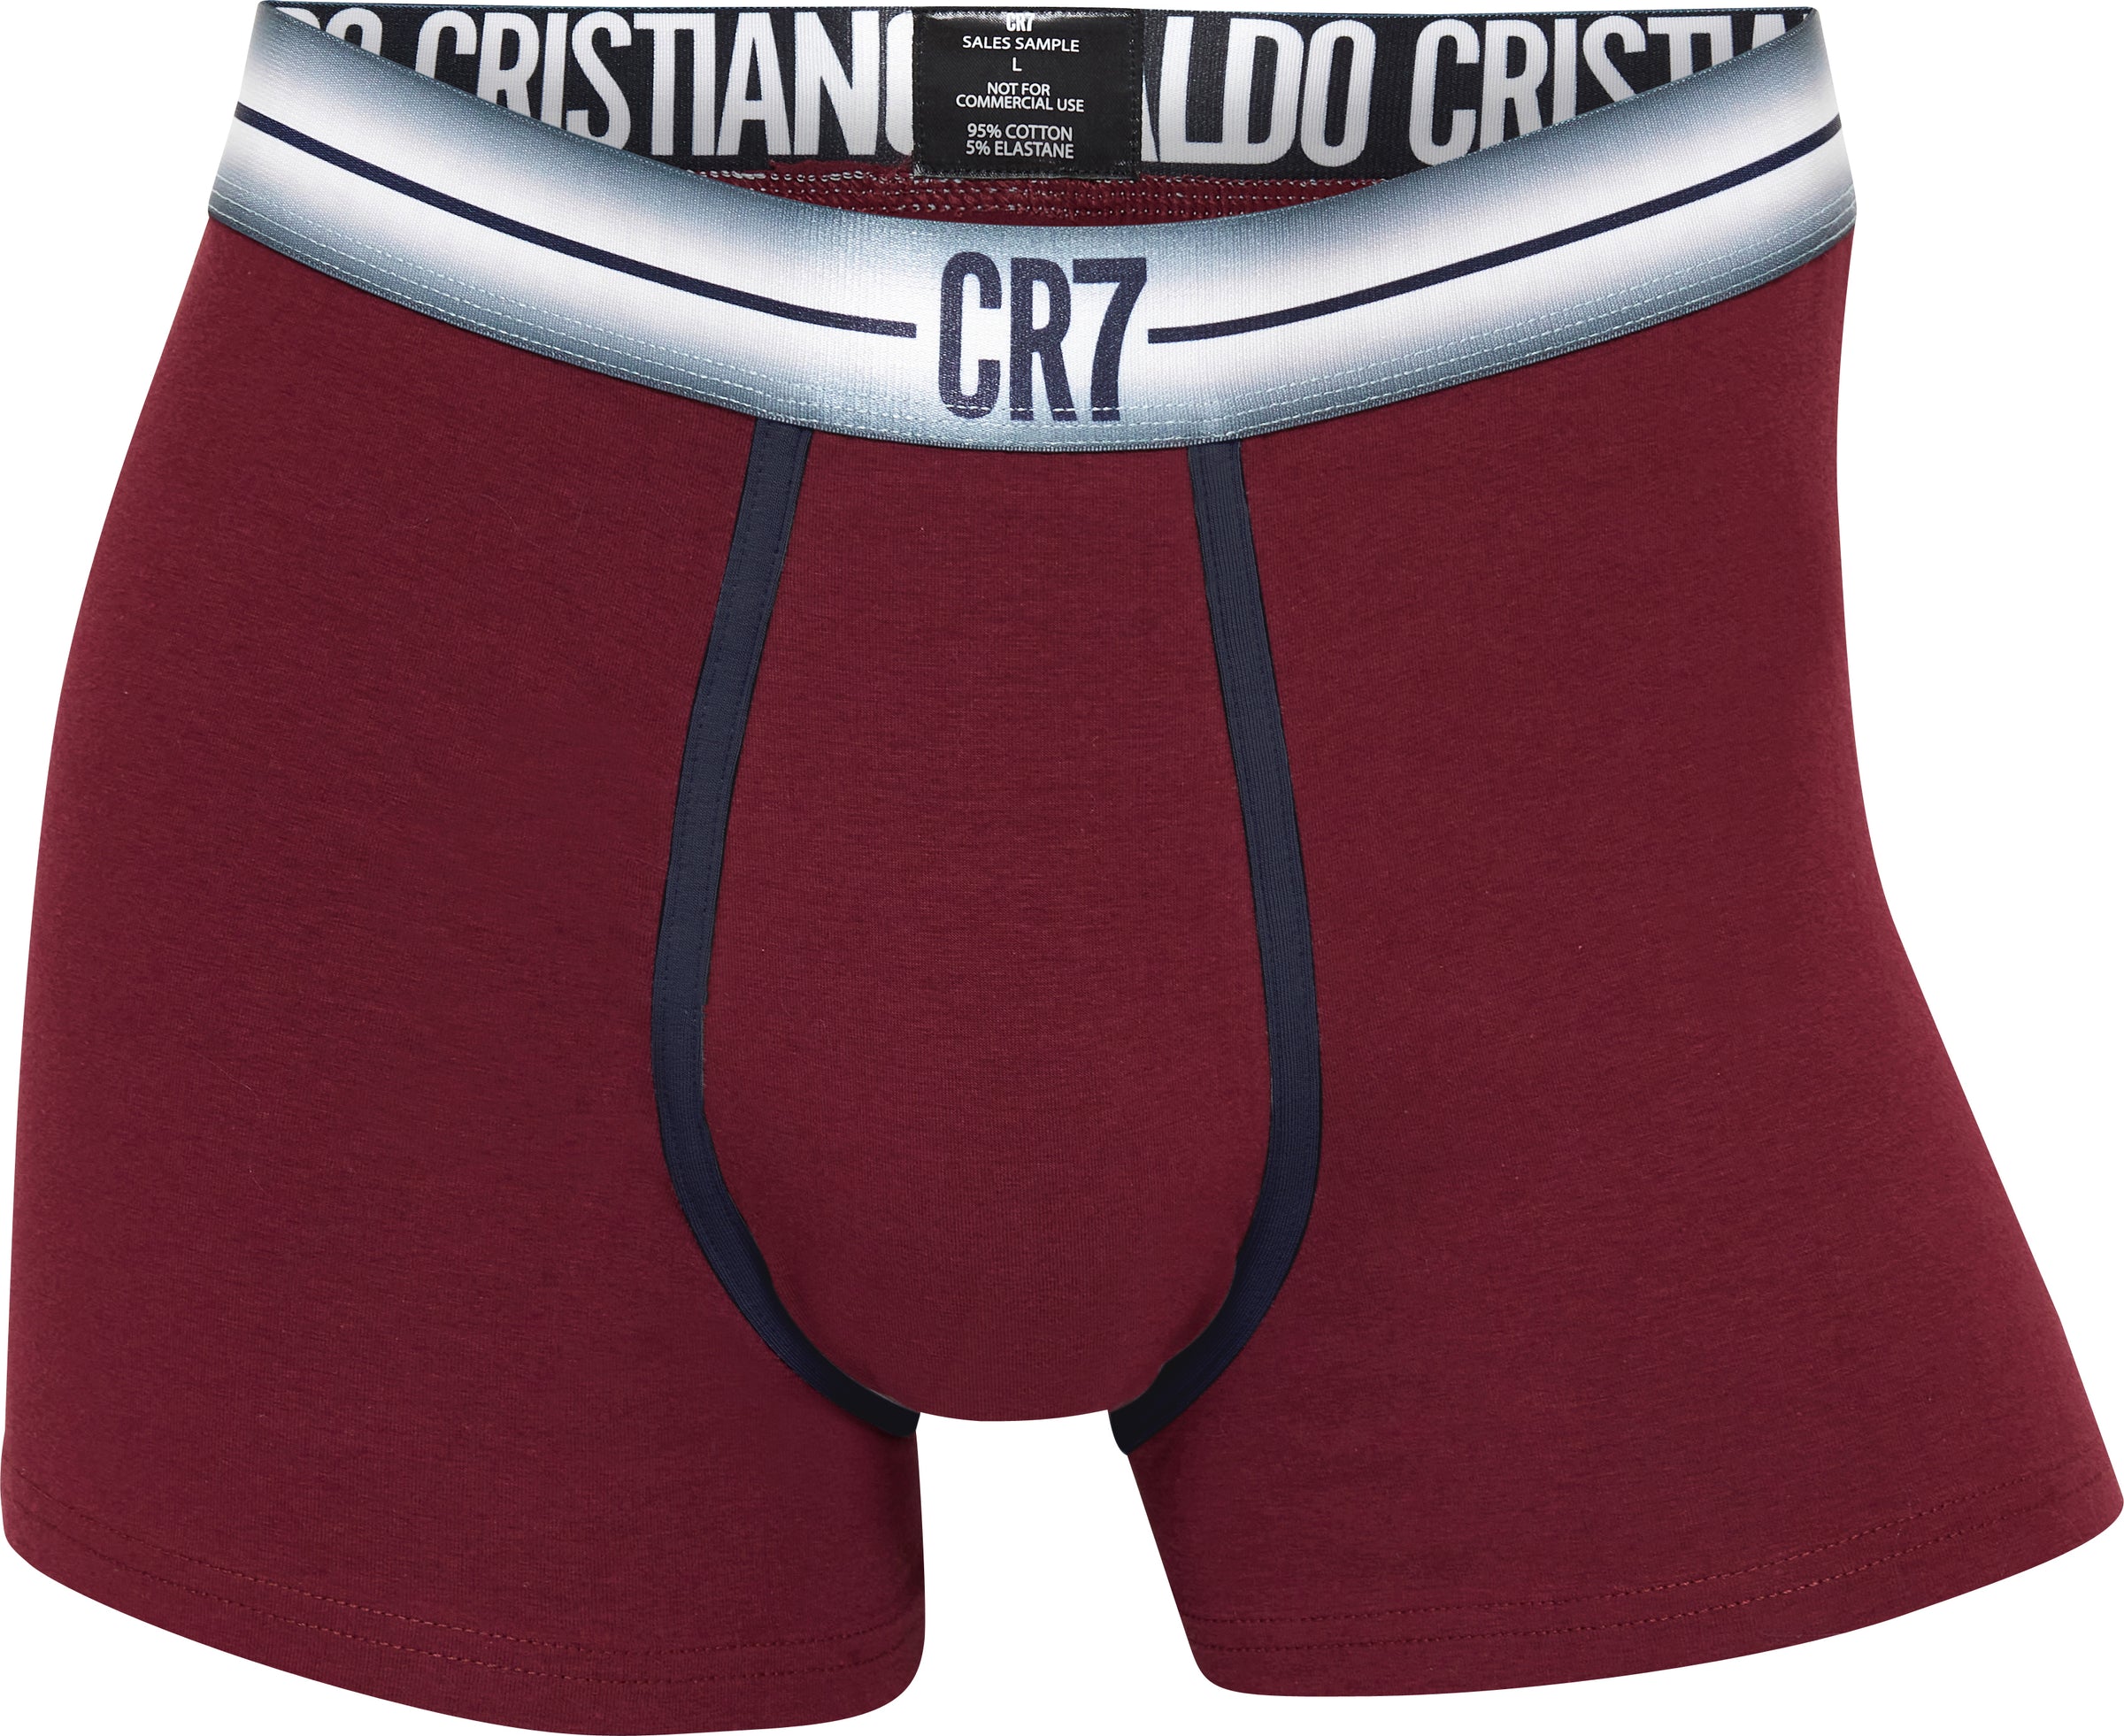 CR7 CRISTIANO RONALDO BOYS 2- Pack BOXER UNDERWEAR TRUNKS RRP £21